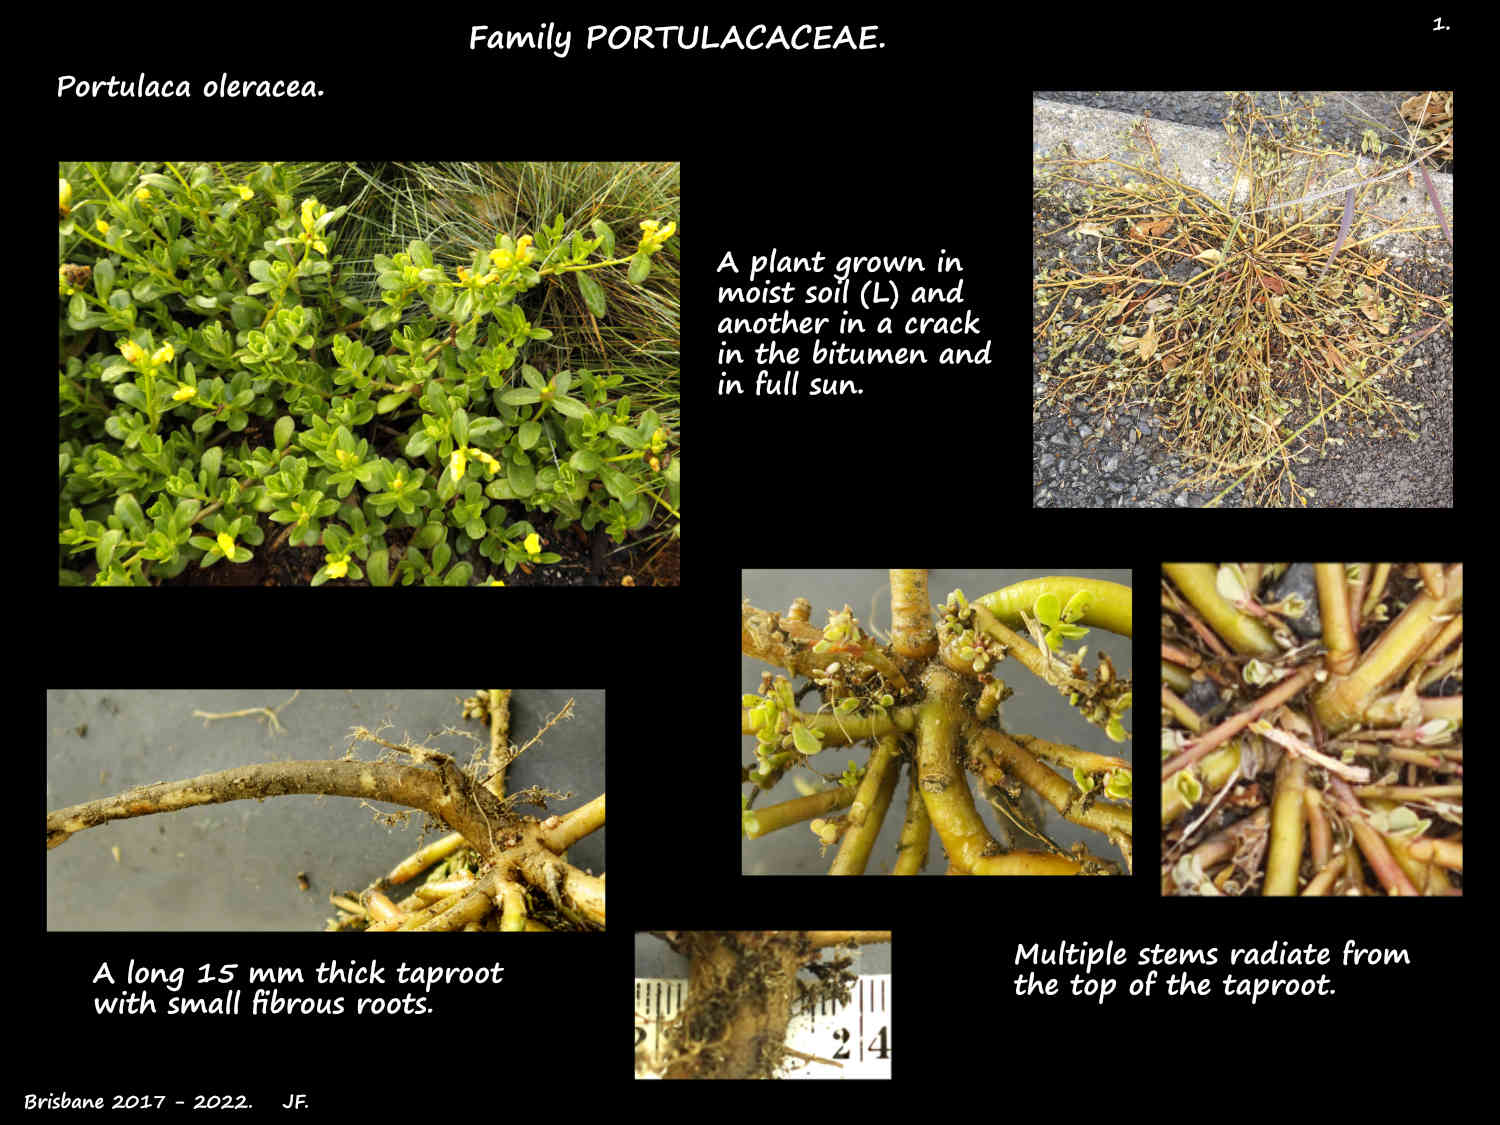 1 Portulaca oleracea plants & taproot